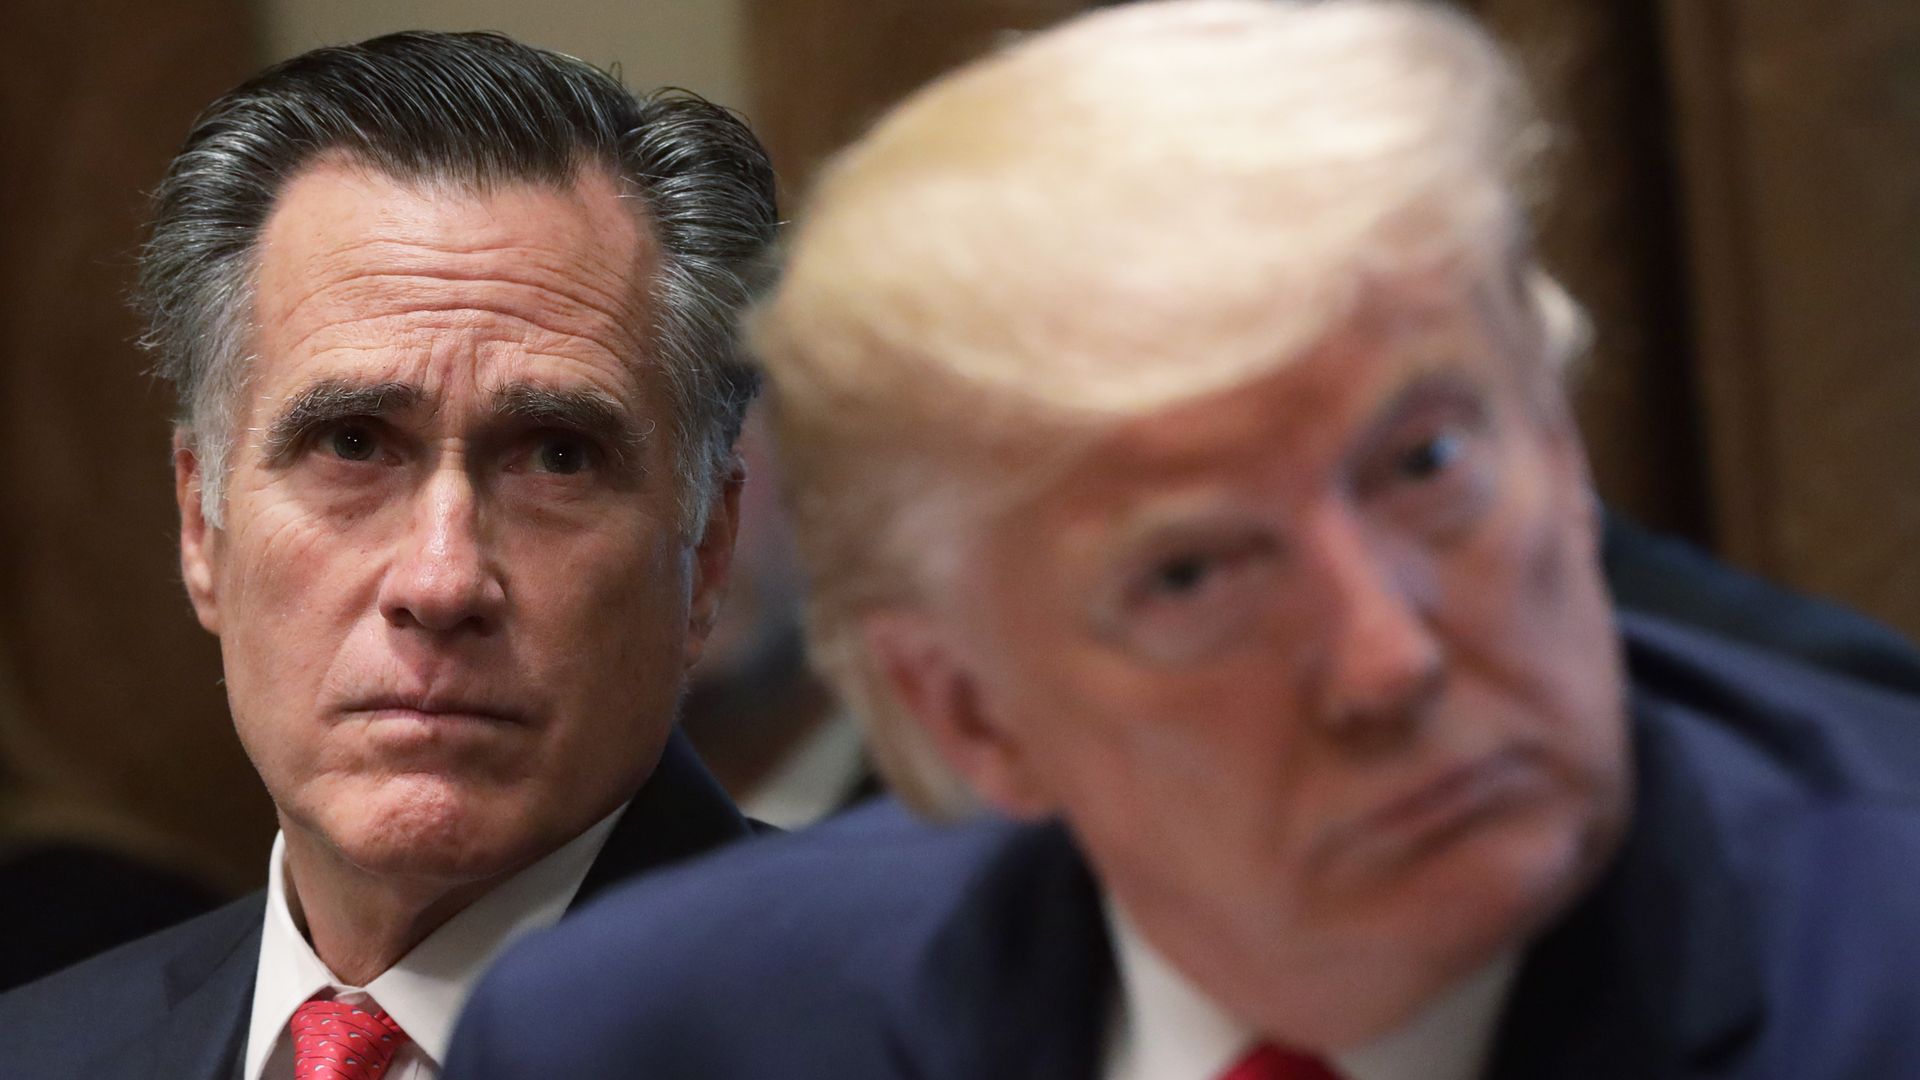 Mitt Romney and President Trump